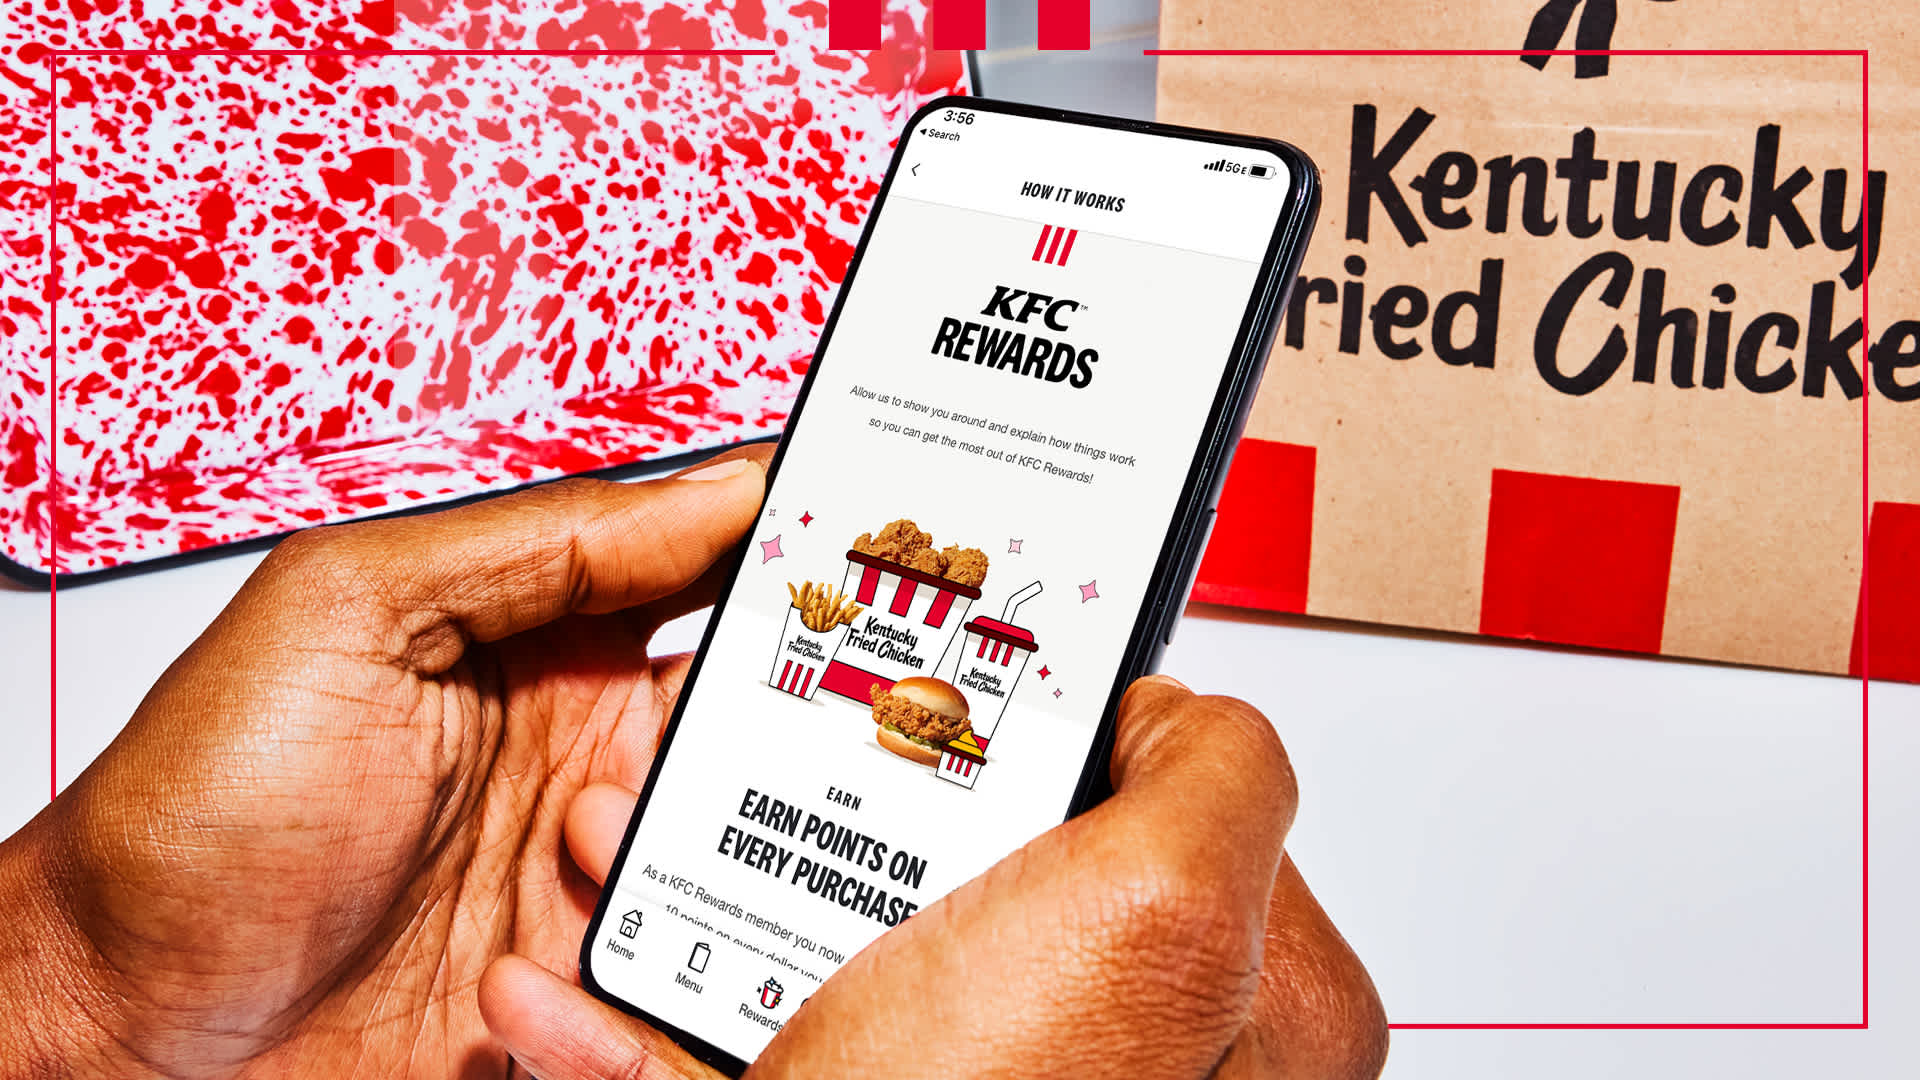 Unlock free fried chicken with new KFC rewards program - order on kfc.com and the KFC App to start earning points